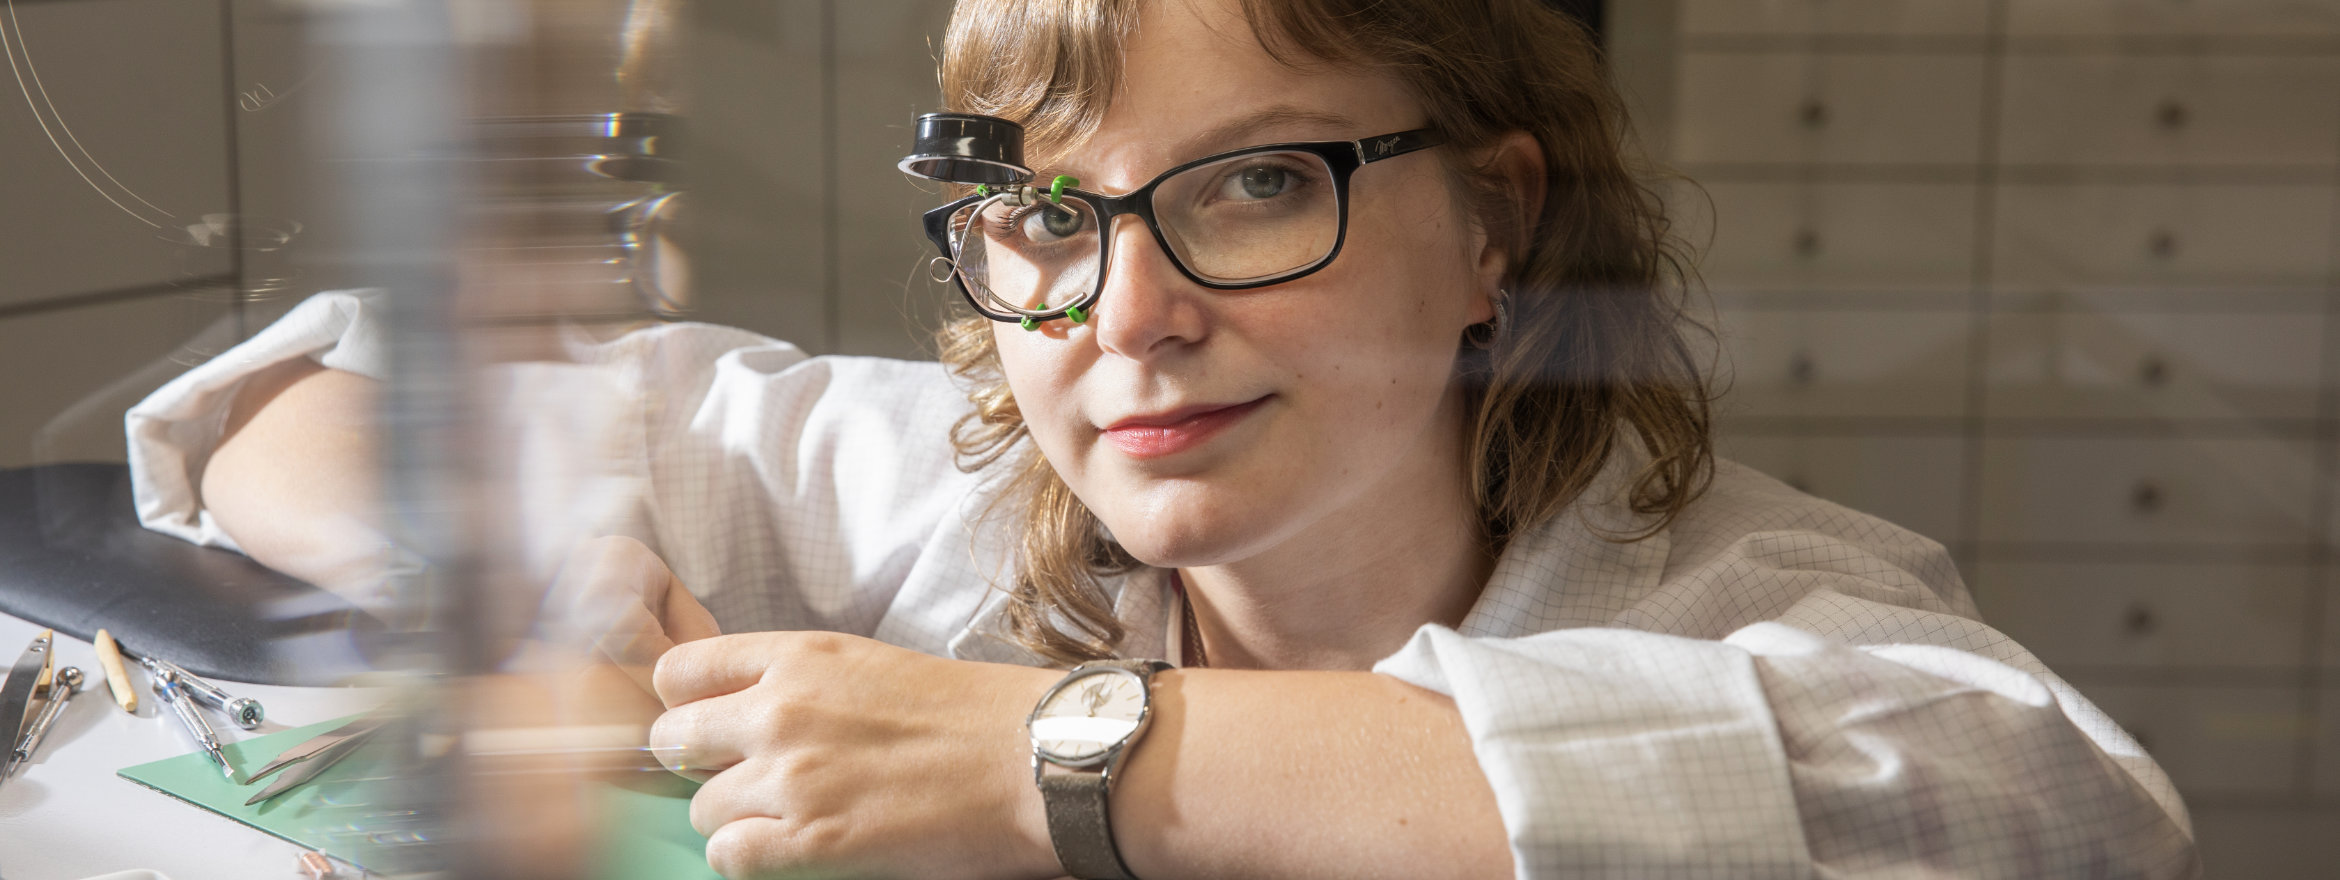 Interviewing Venla Voutilainen on Her Watchmaking Journey